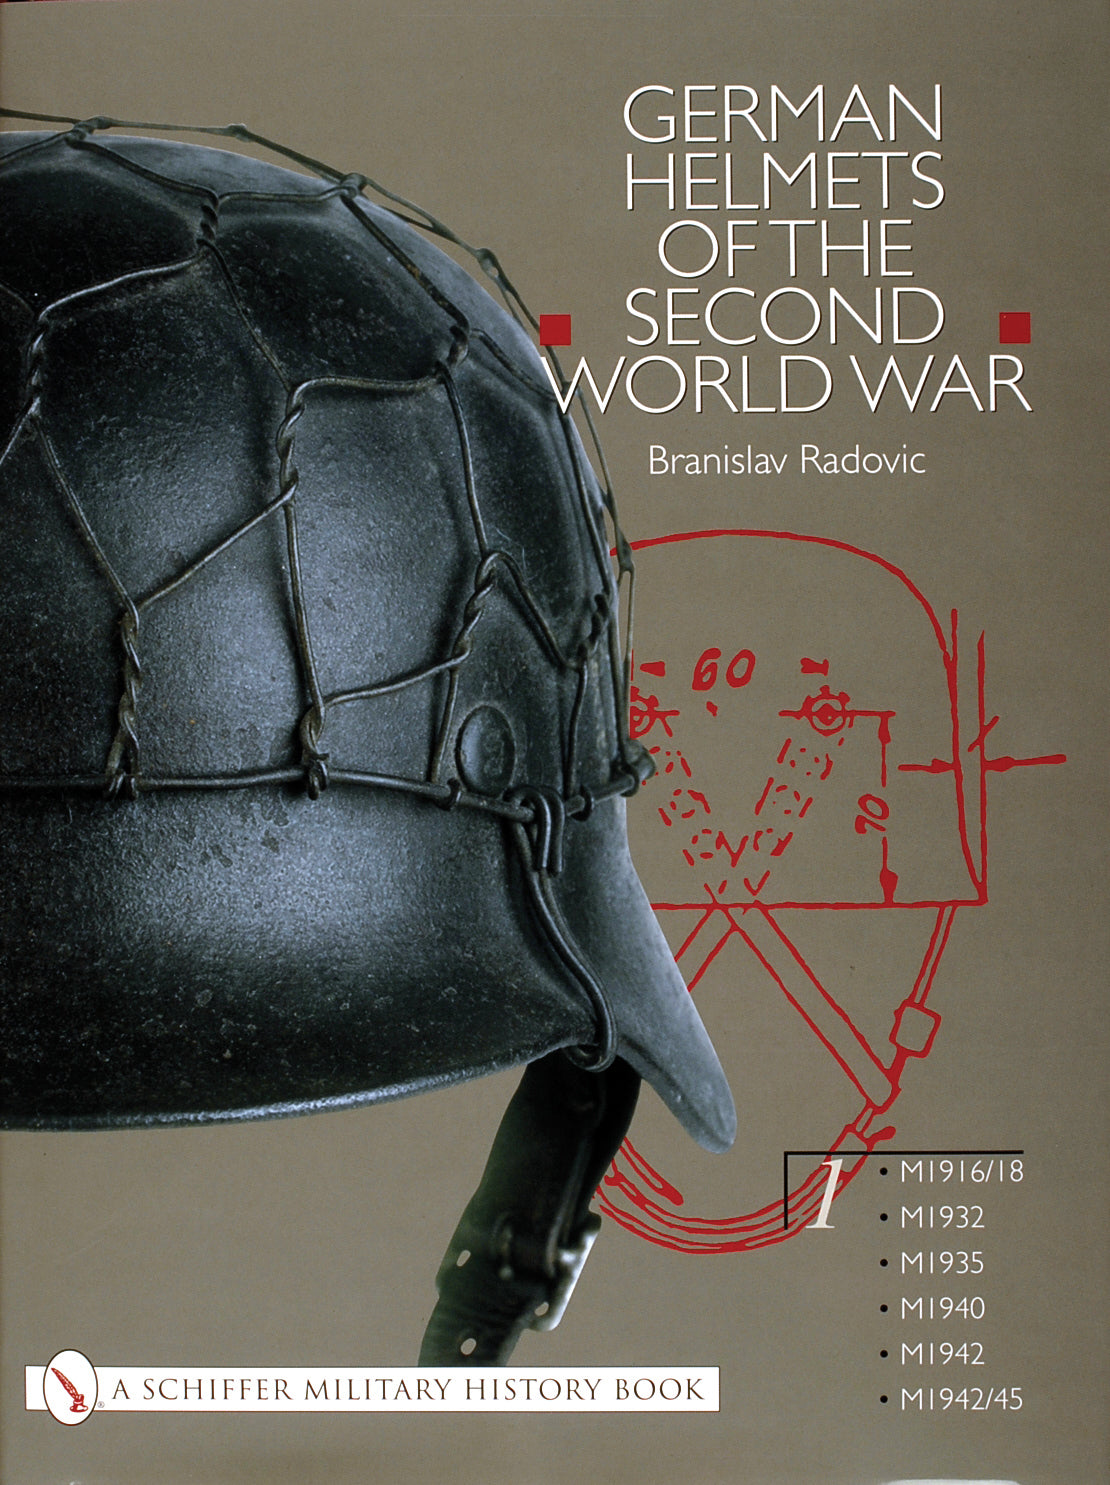 German Helmets of the Second World War Vol. 1